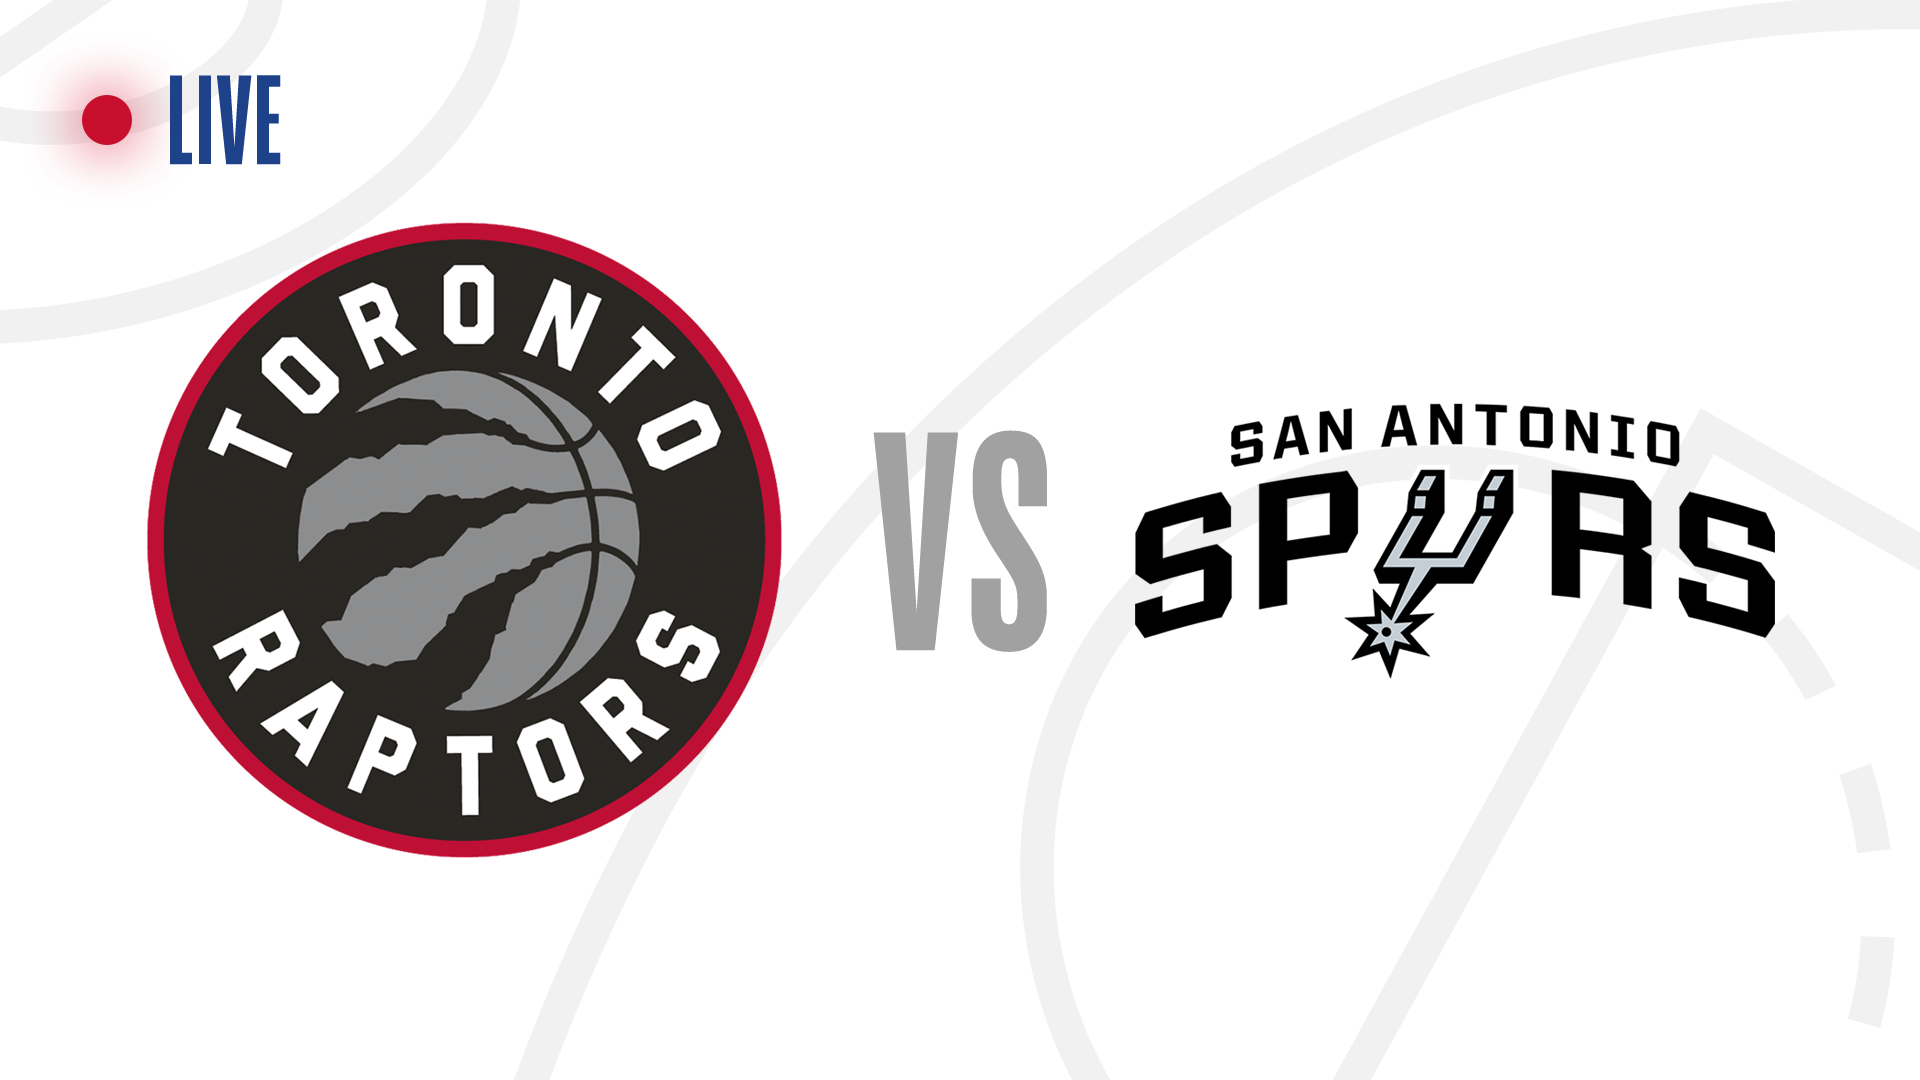 Toronto Raptors vs. San Antonio Spurs: Live score updates, highlights and stats | NBA.com